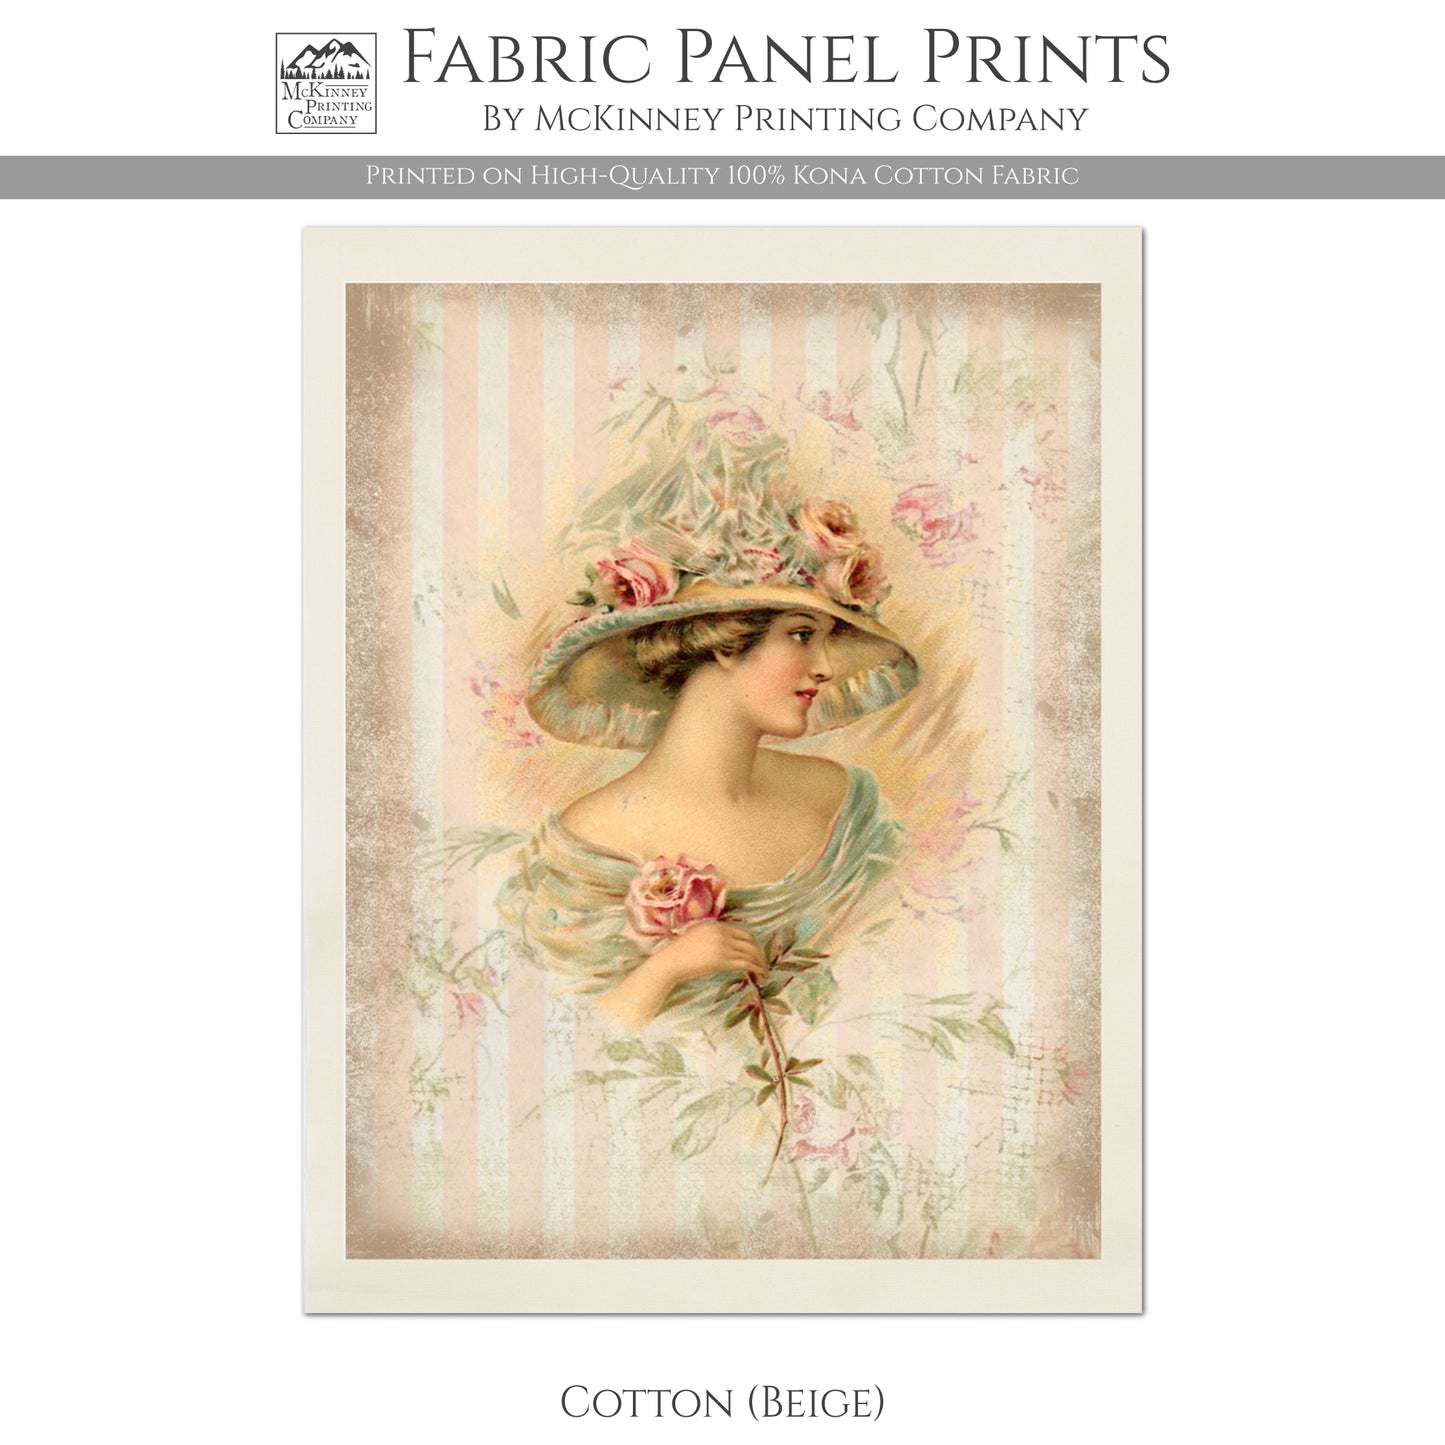 Victorian Art, Female Portrait, Woman in Hat, Fabric Panel Print - Cotton